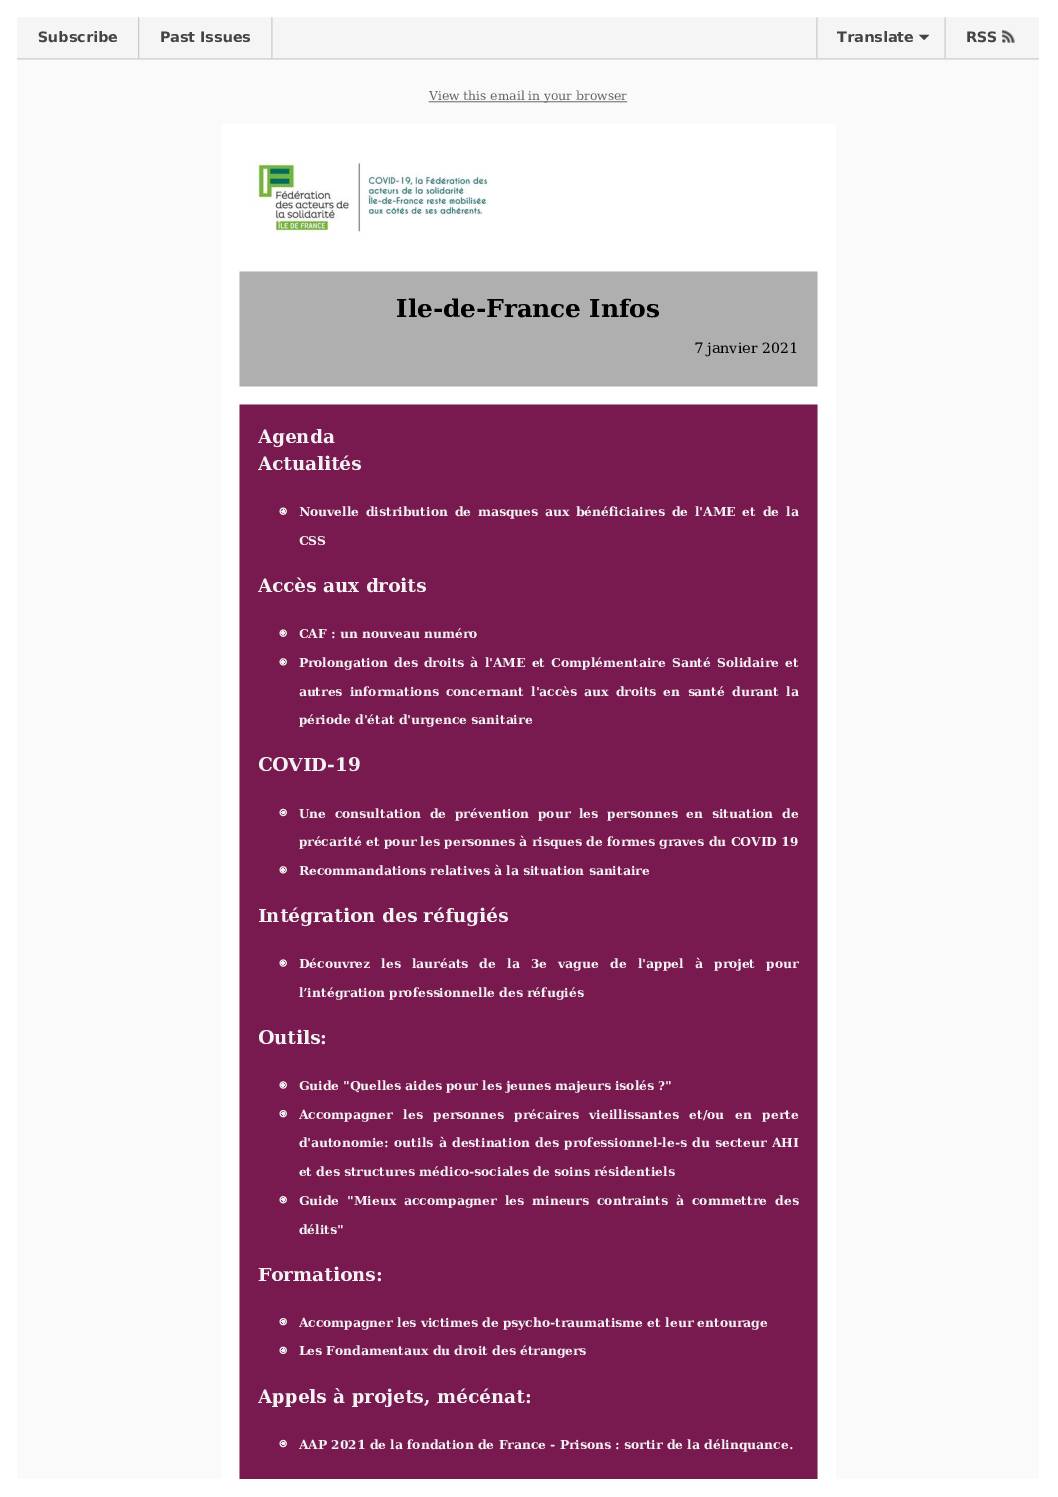 Ile-de-France Infos 7 janvier 21